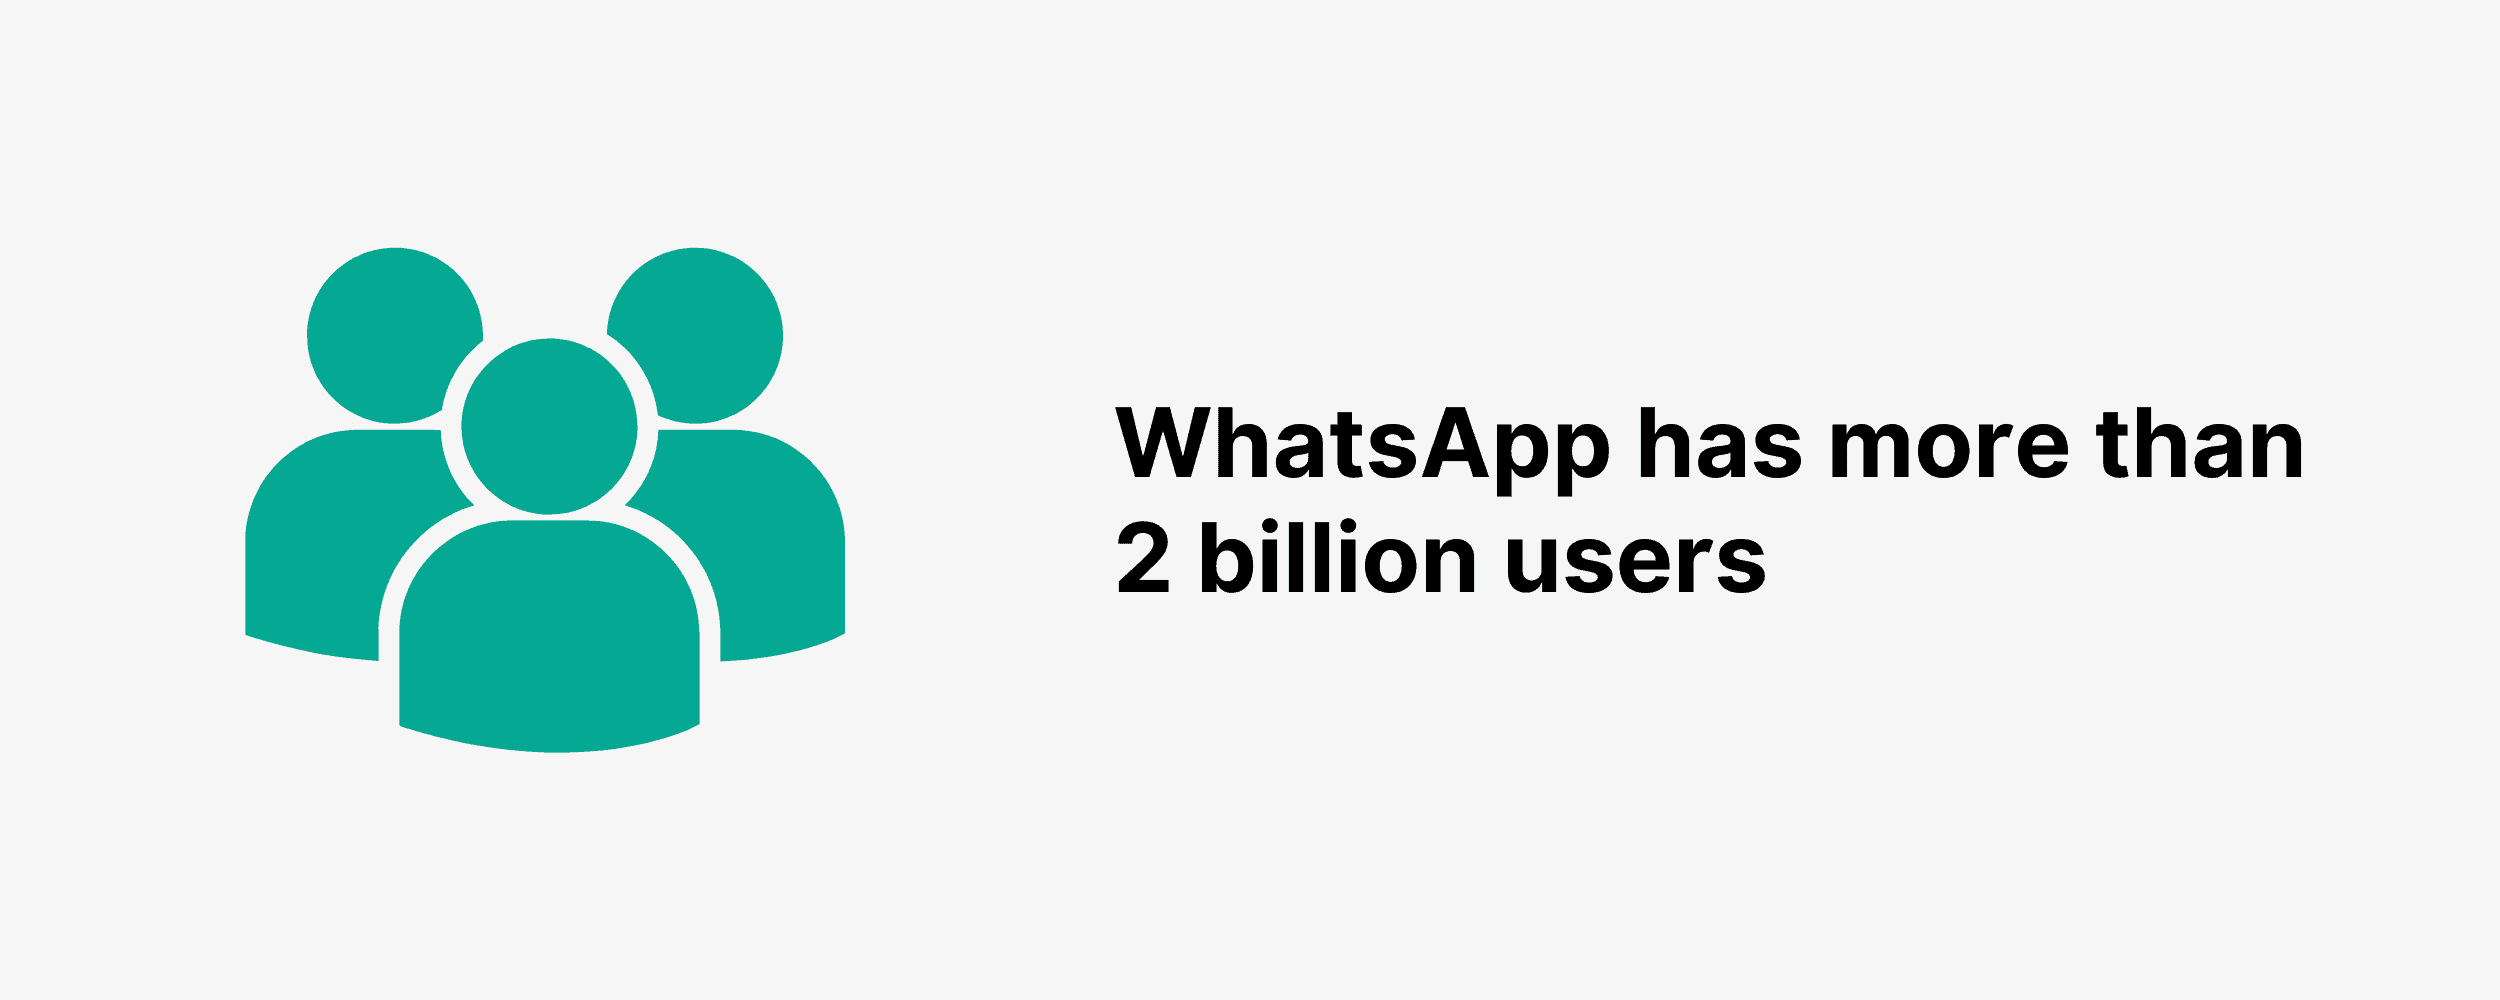 WhatsApp has more than 2 billion users